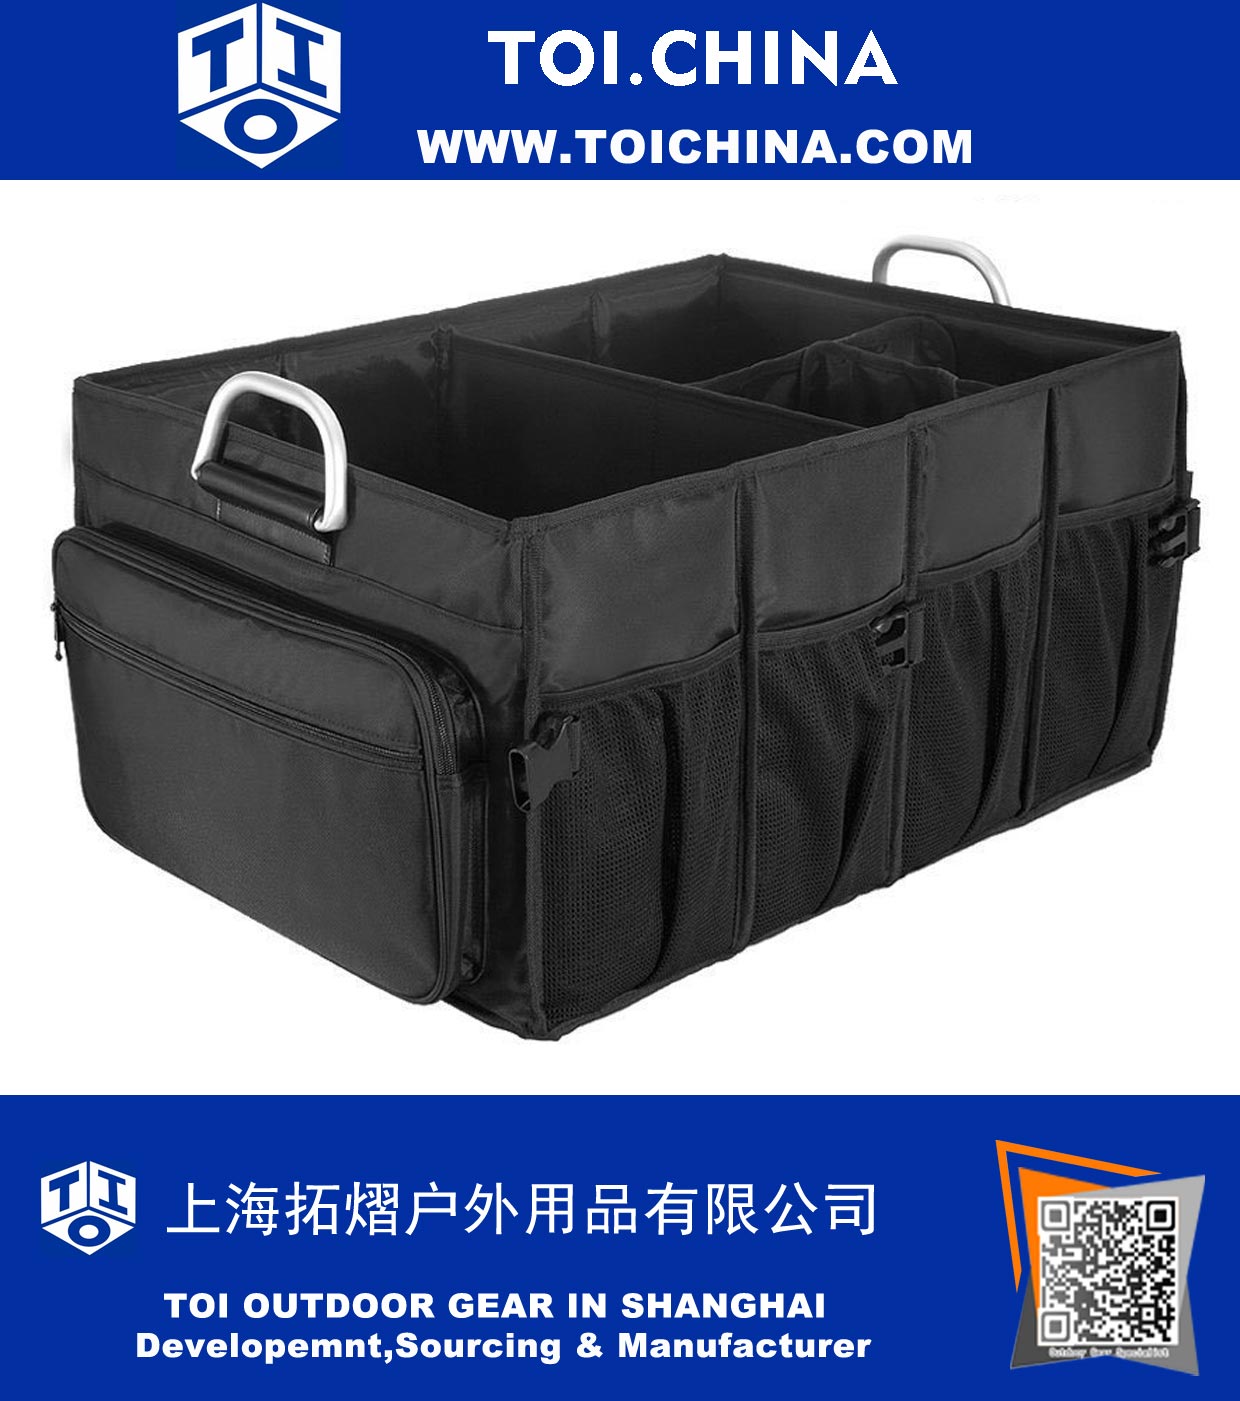 Foldable Cargo Trunk Organizer - High Quality Big Capacity Washable Storage with Metal Handles - Bonus Car Cooler